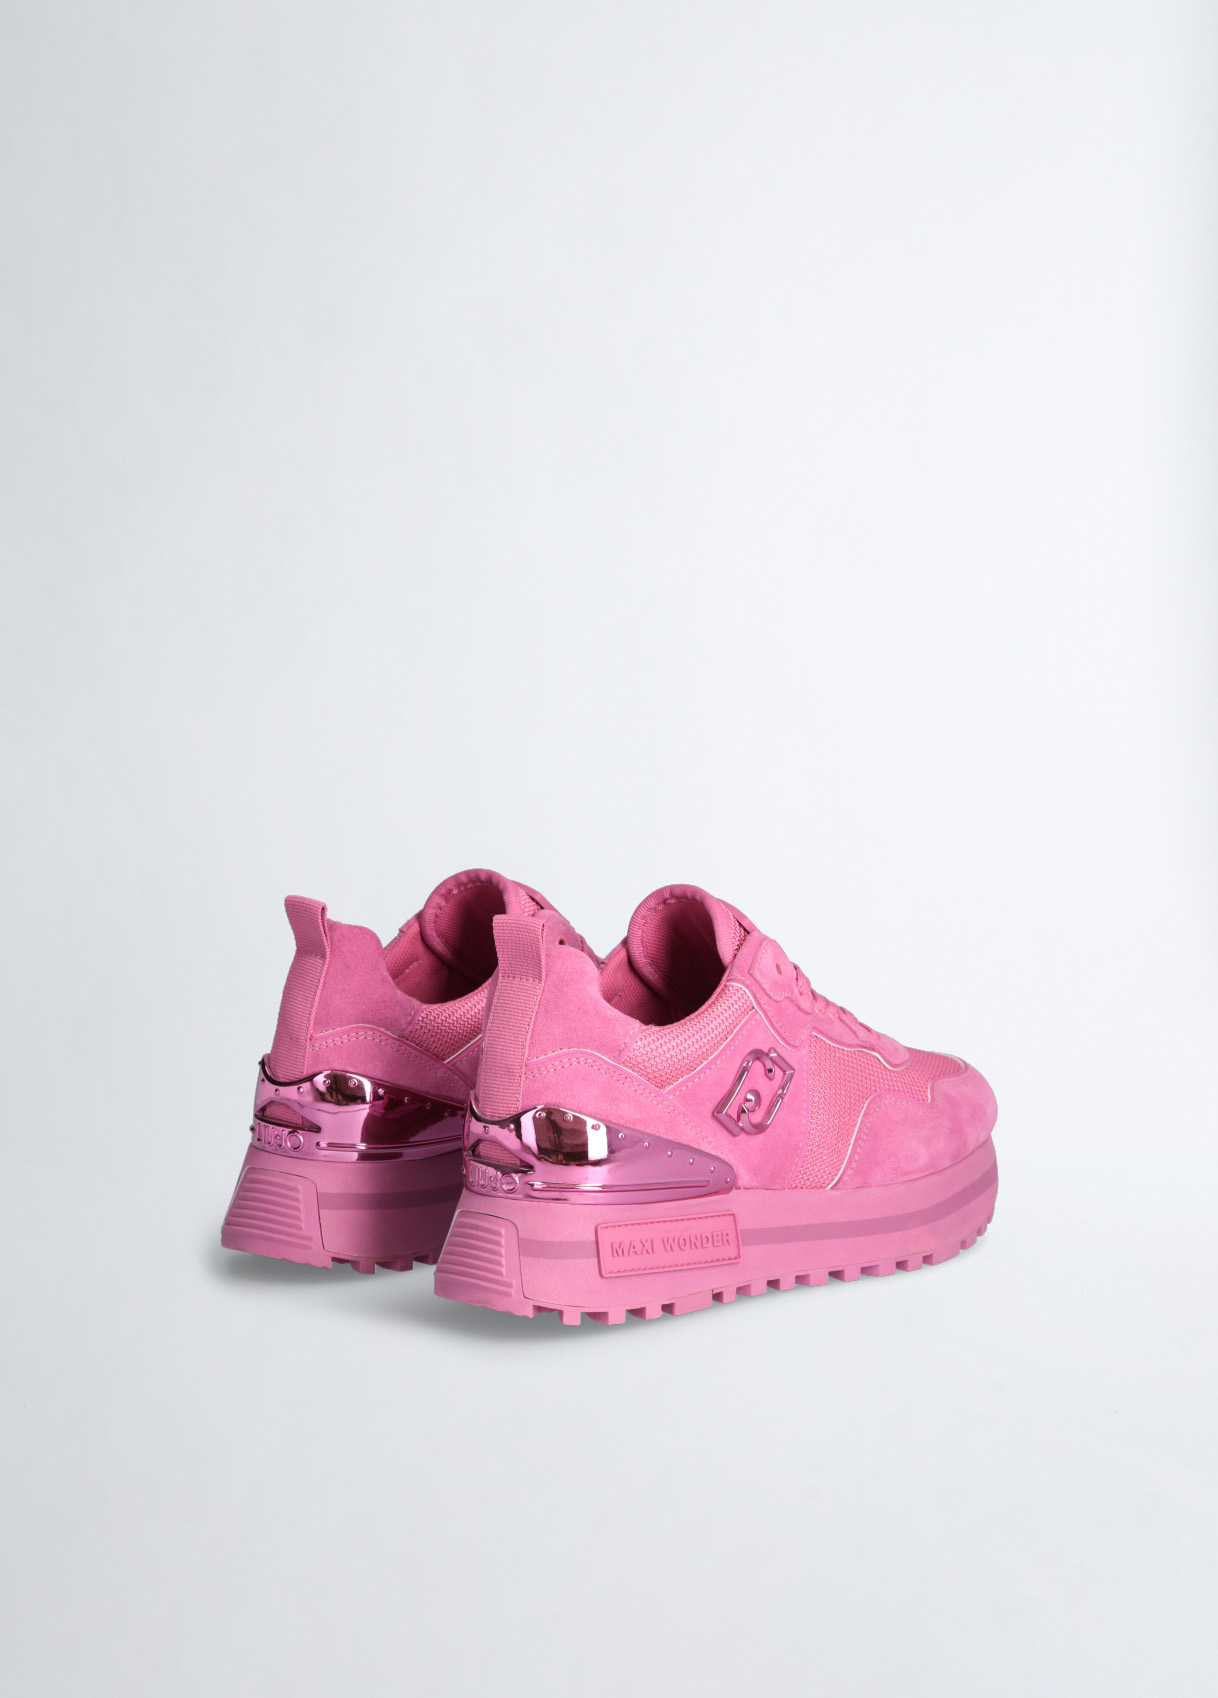 shoes women LIU JO sneakers pink textile suede AIR 01 BD744